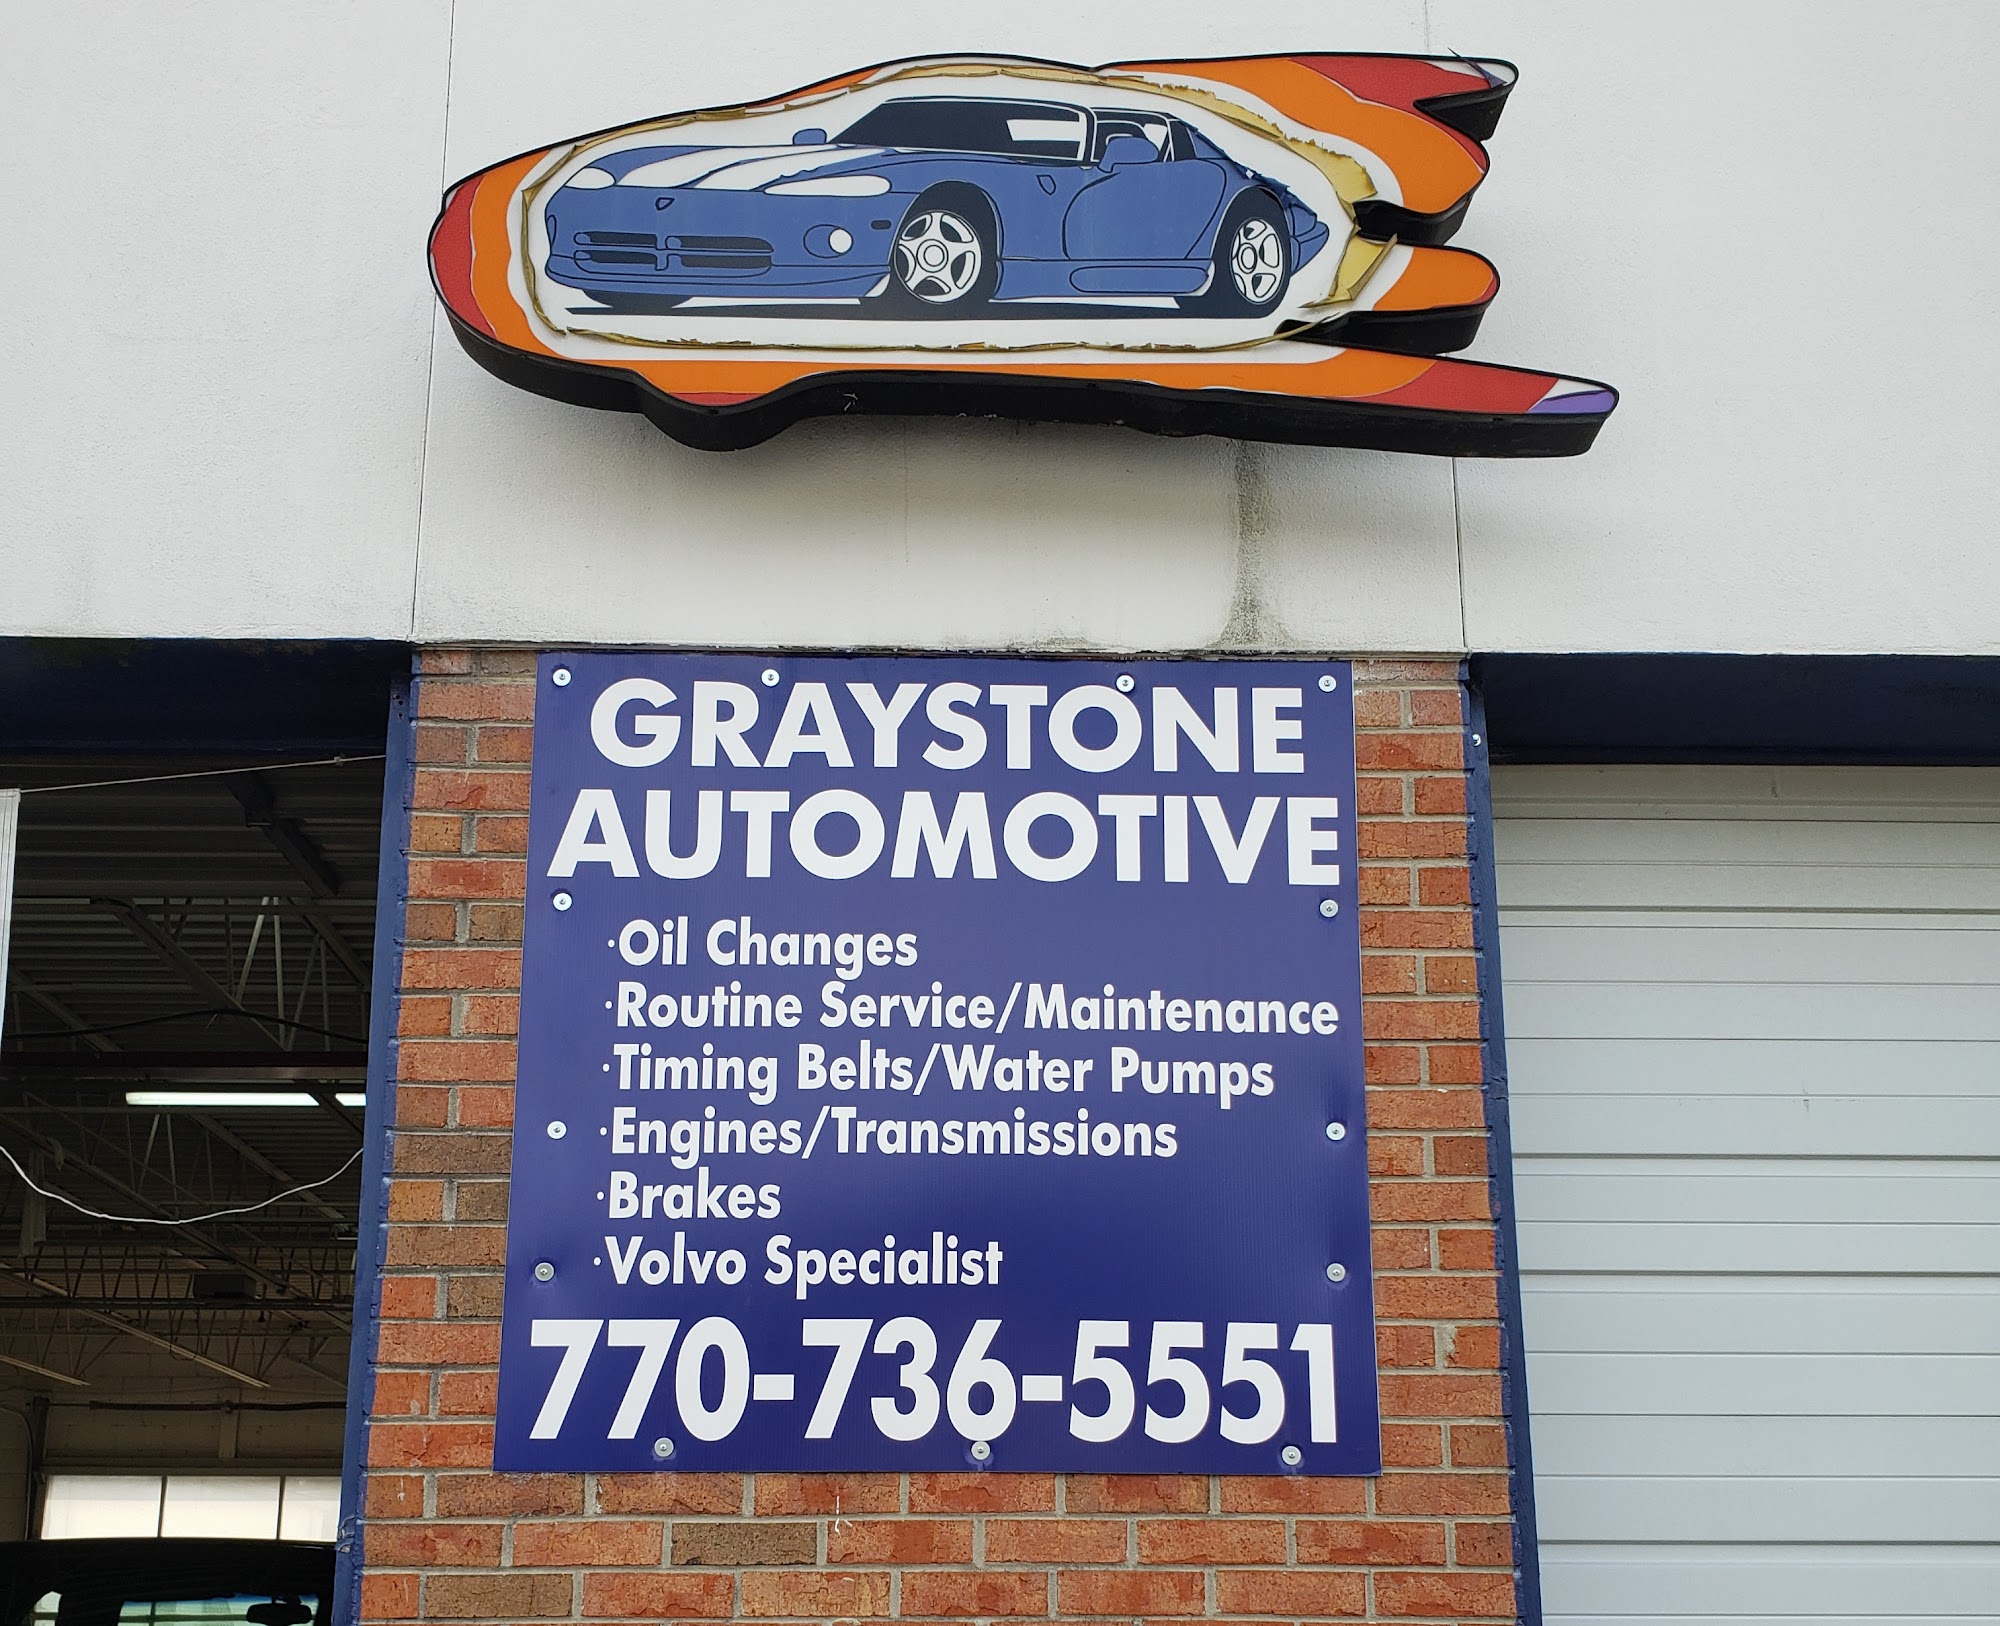 Graystone Automotive